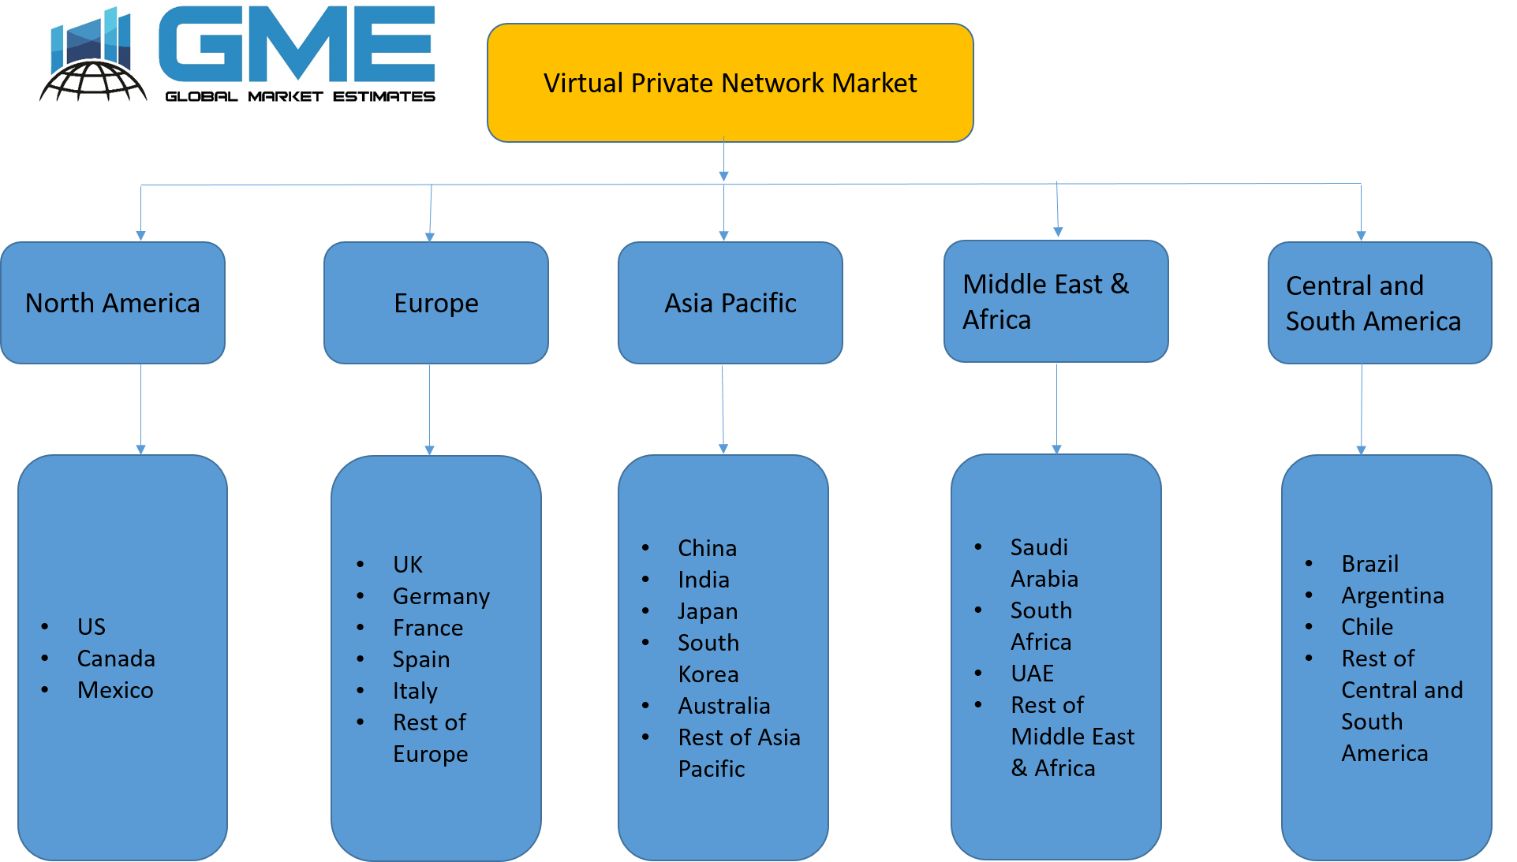 Virtual Private Network Market - Regional Analysis